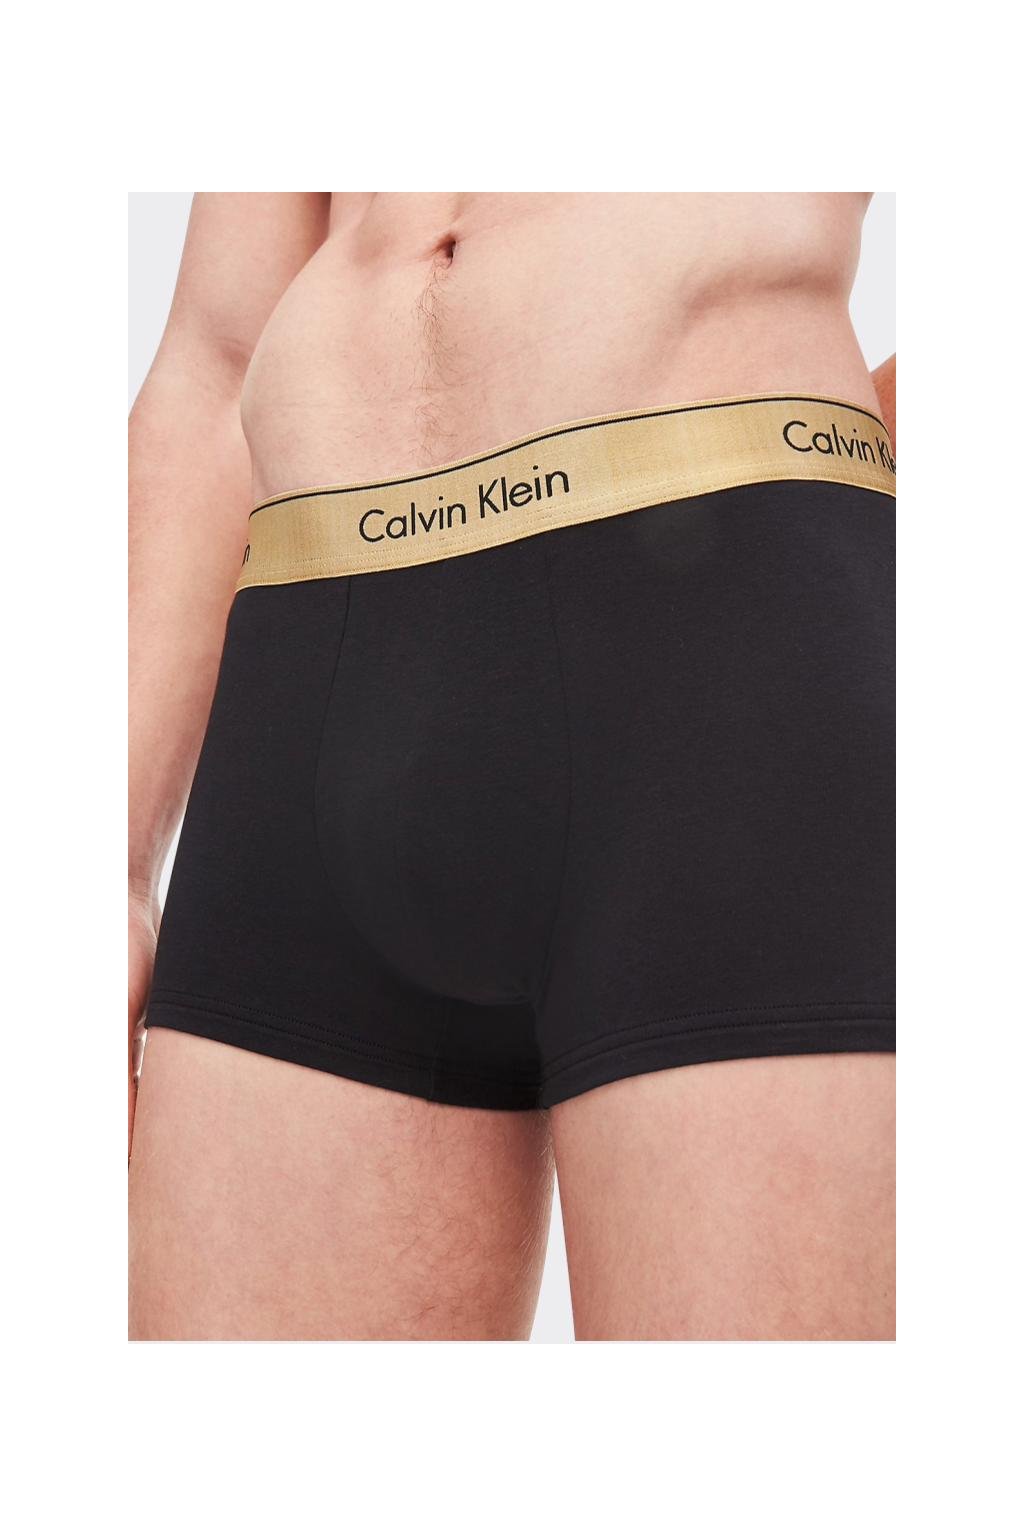 Calvin Klein Modern Cotton metallic boxerky - černá/zlatá - BePink.cz